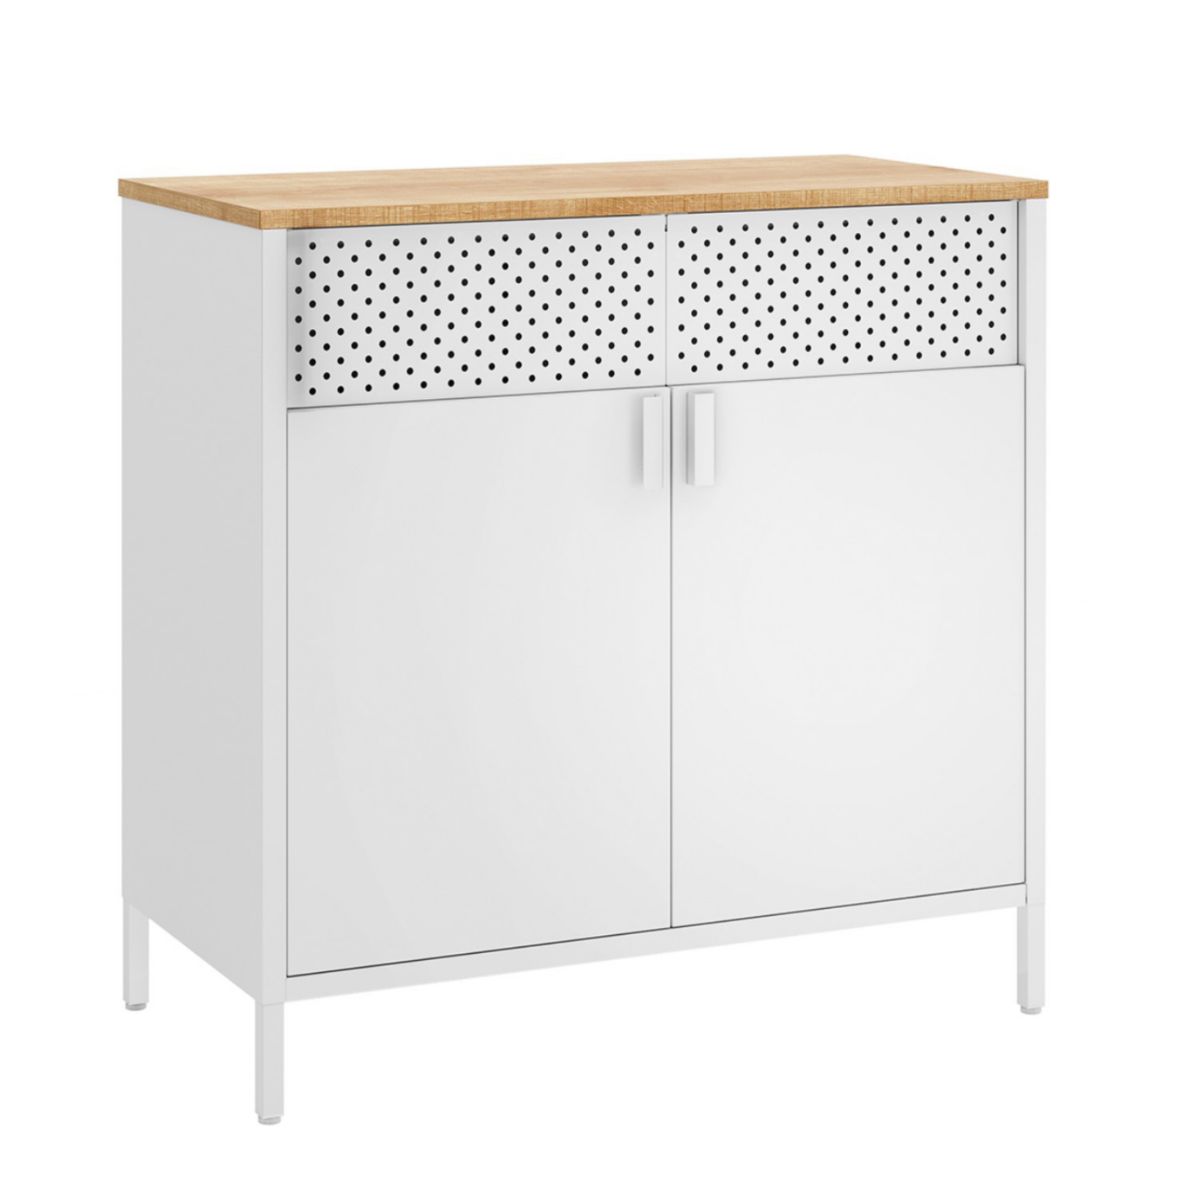 Storage Sideboard, With Adjustable Shelves, Floor Storage Cupboard, Steel Frame Slickblue